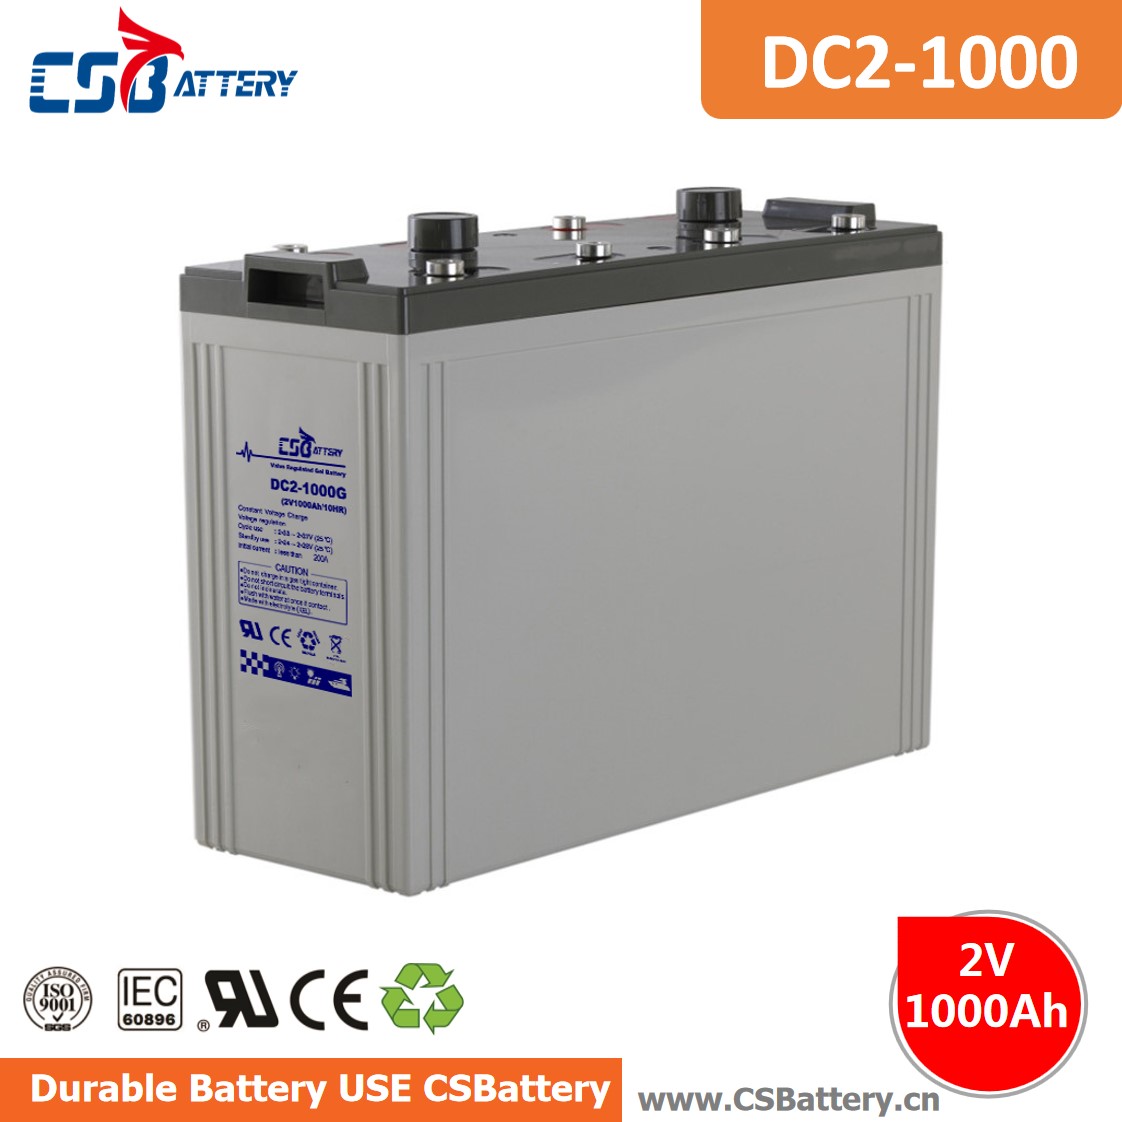 DC2-1000 2V 200Ah Deep Cycle Gel Batery